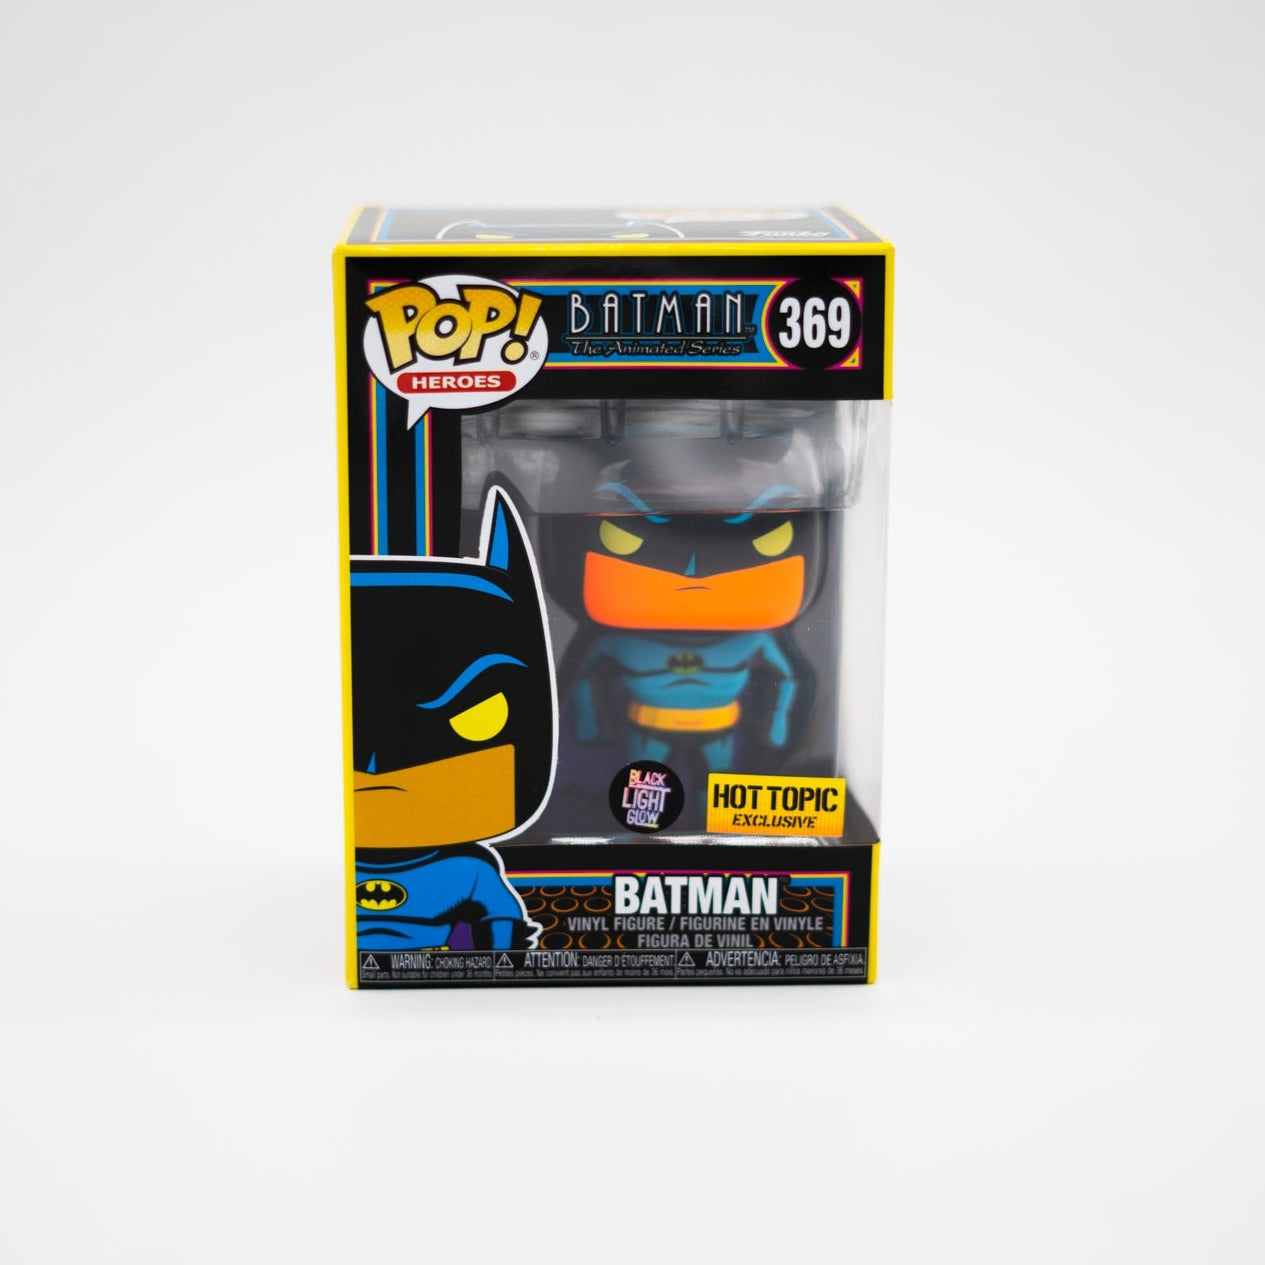 Funko Pop! Batman 369 Black light Hot Topic